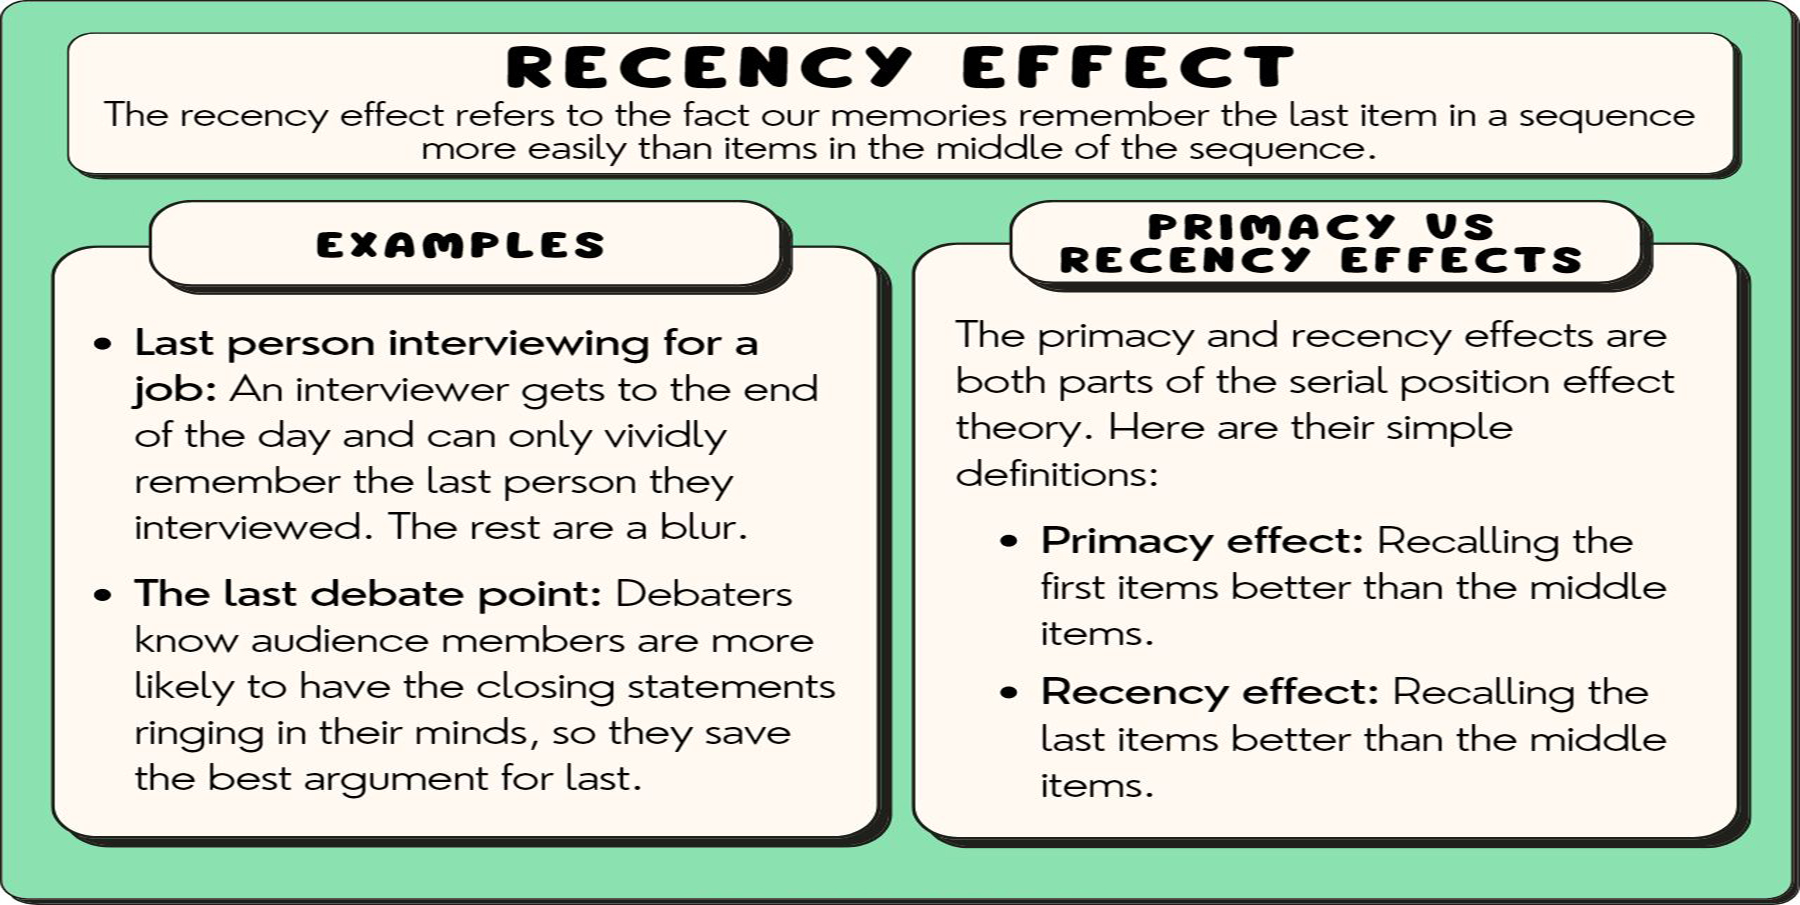 Recency Effect illustrations